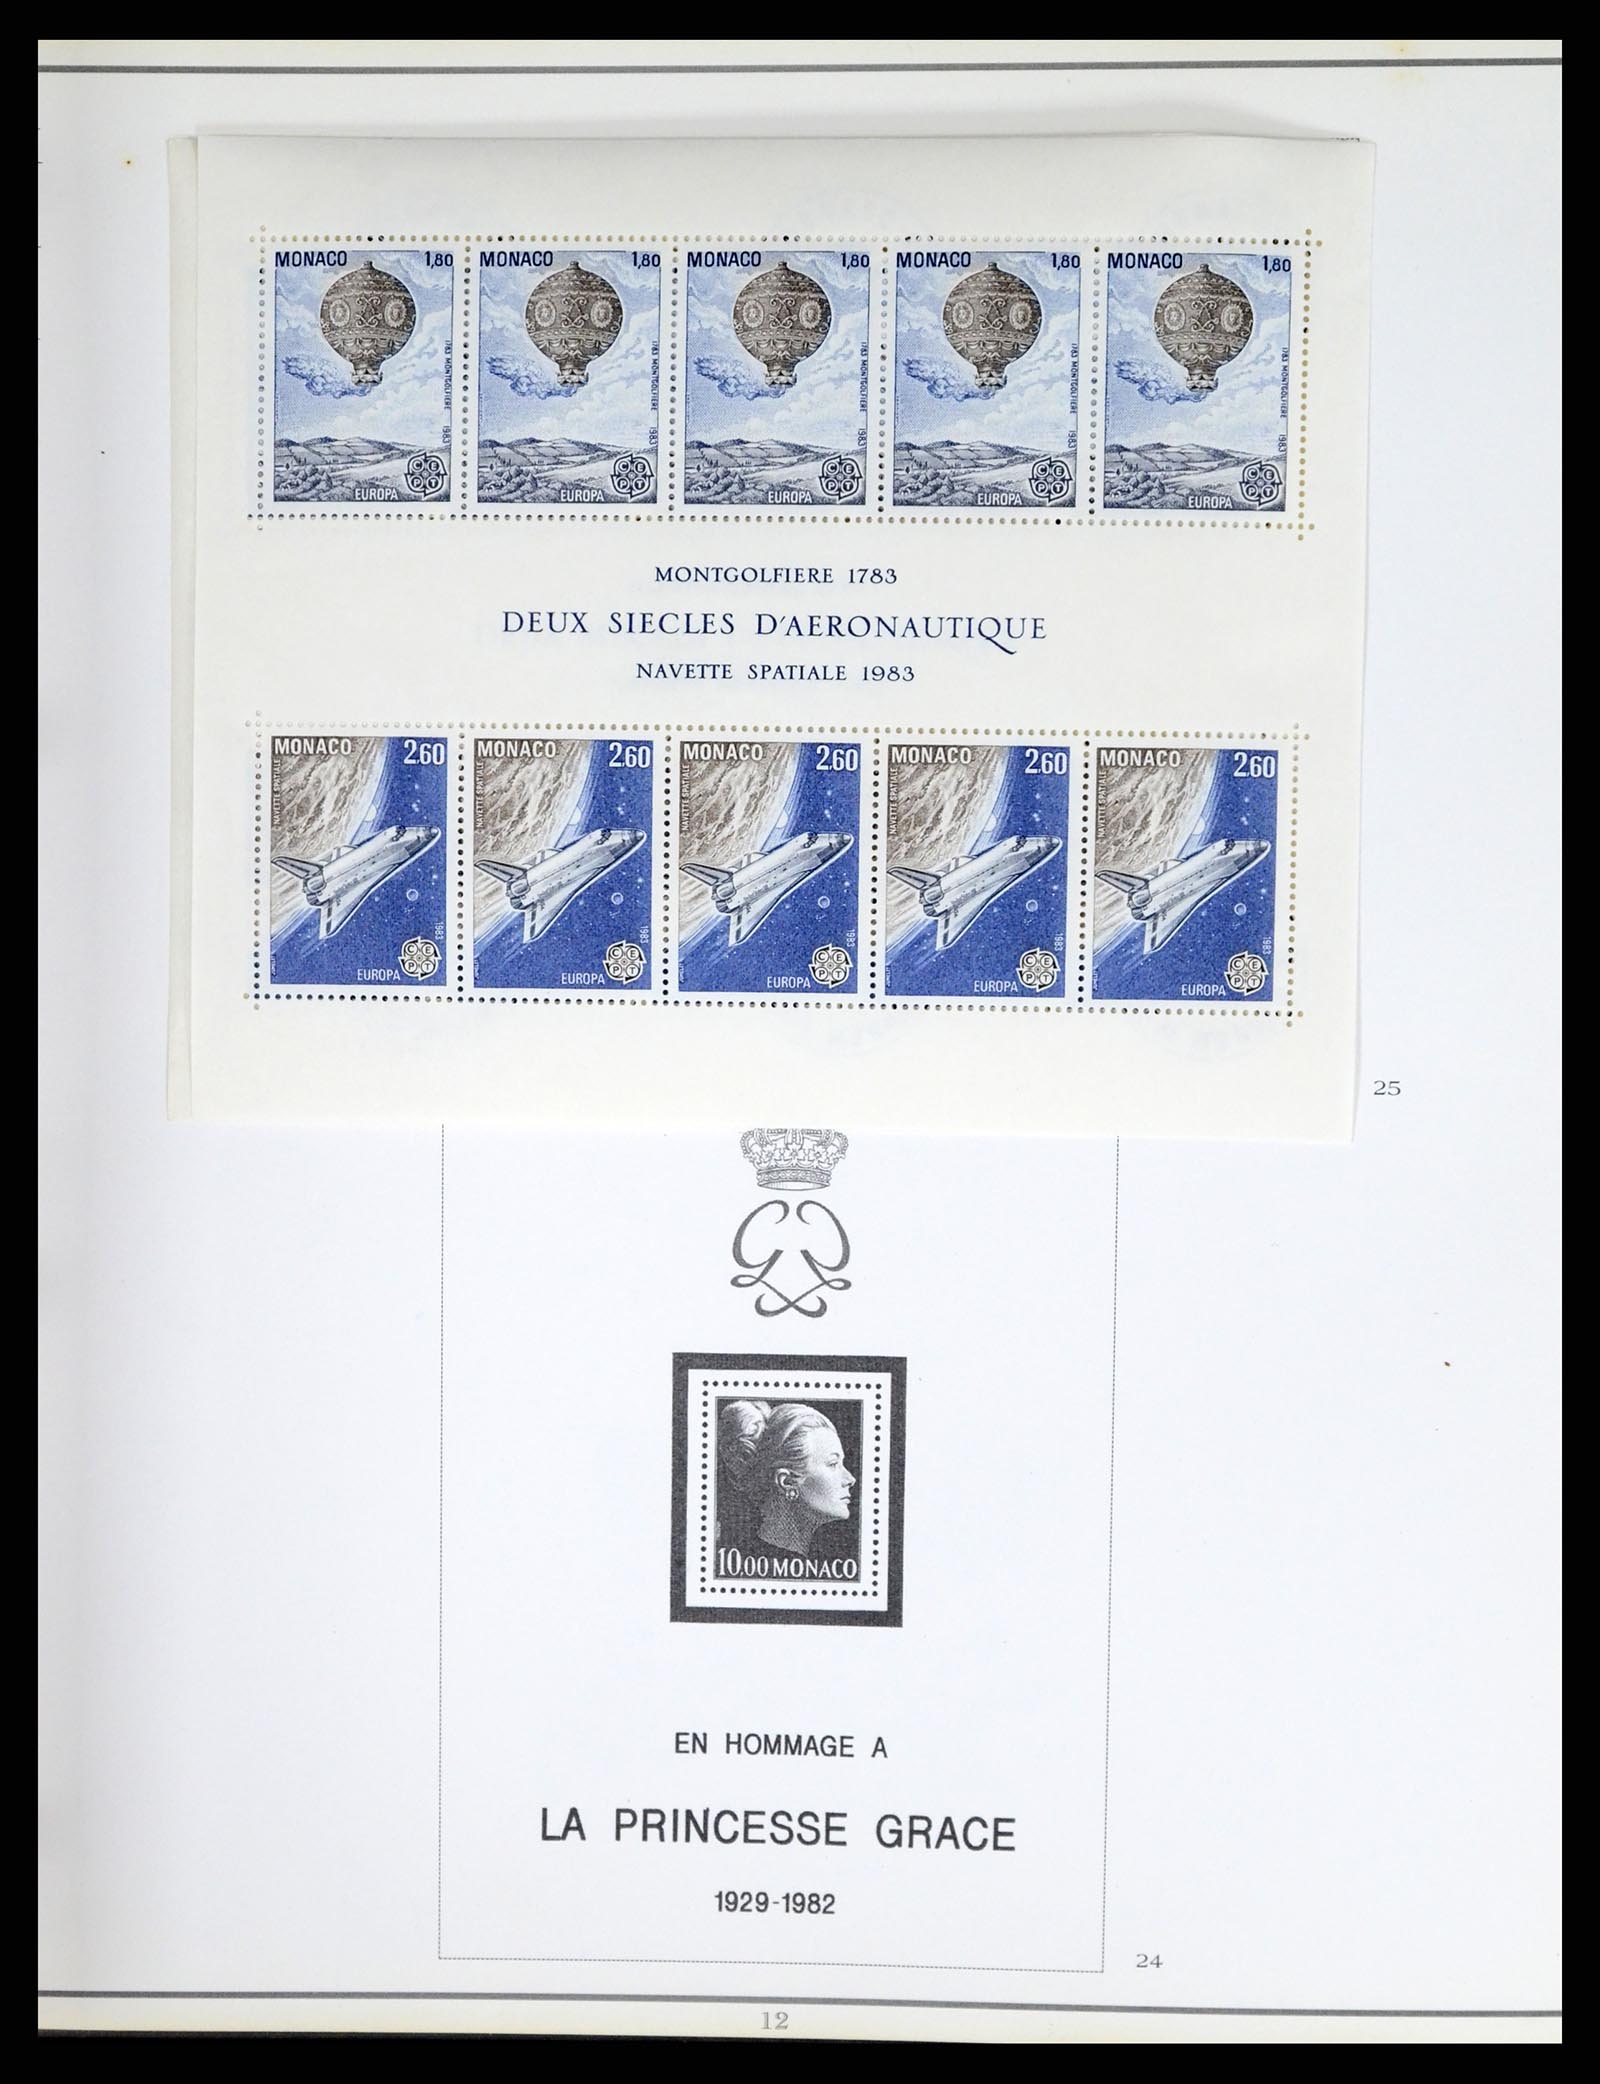 37437 185 - Stamp collection 37437 Monaco 1885-1996.